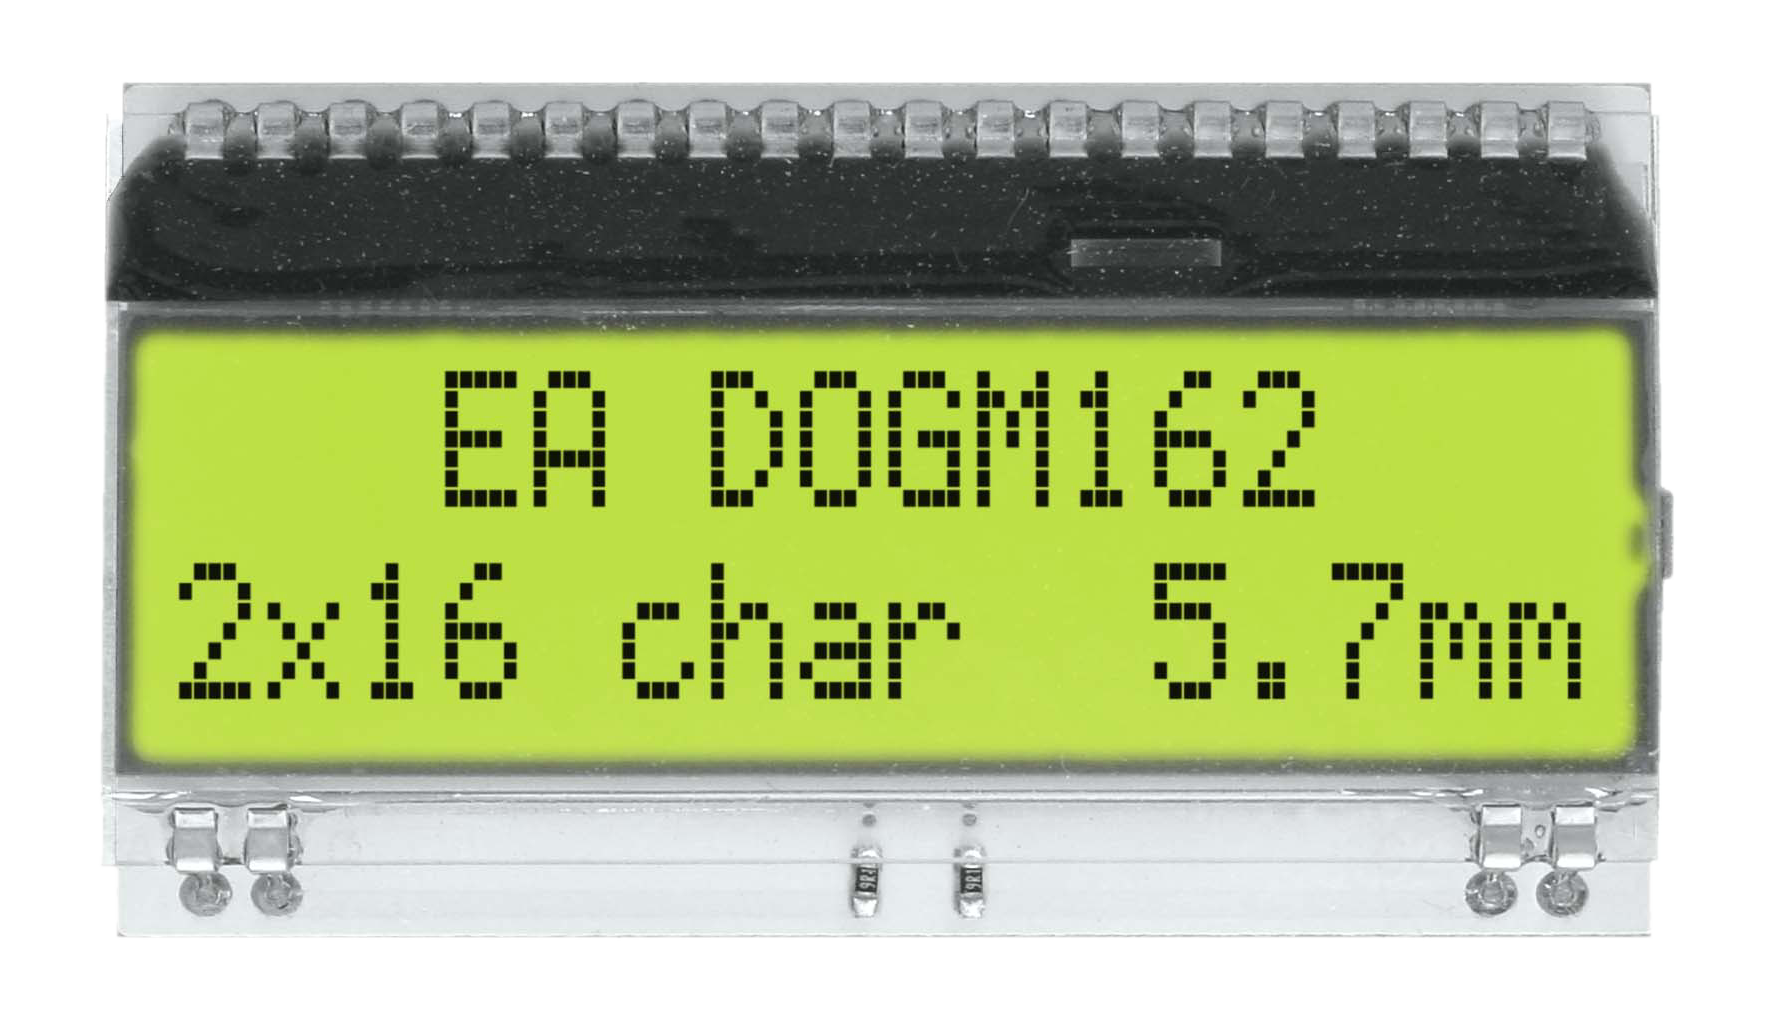 2x16 Character Display EA DOGM162E-A